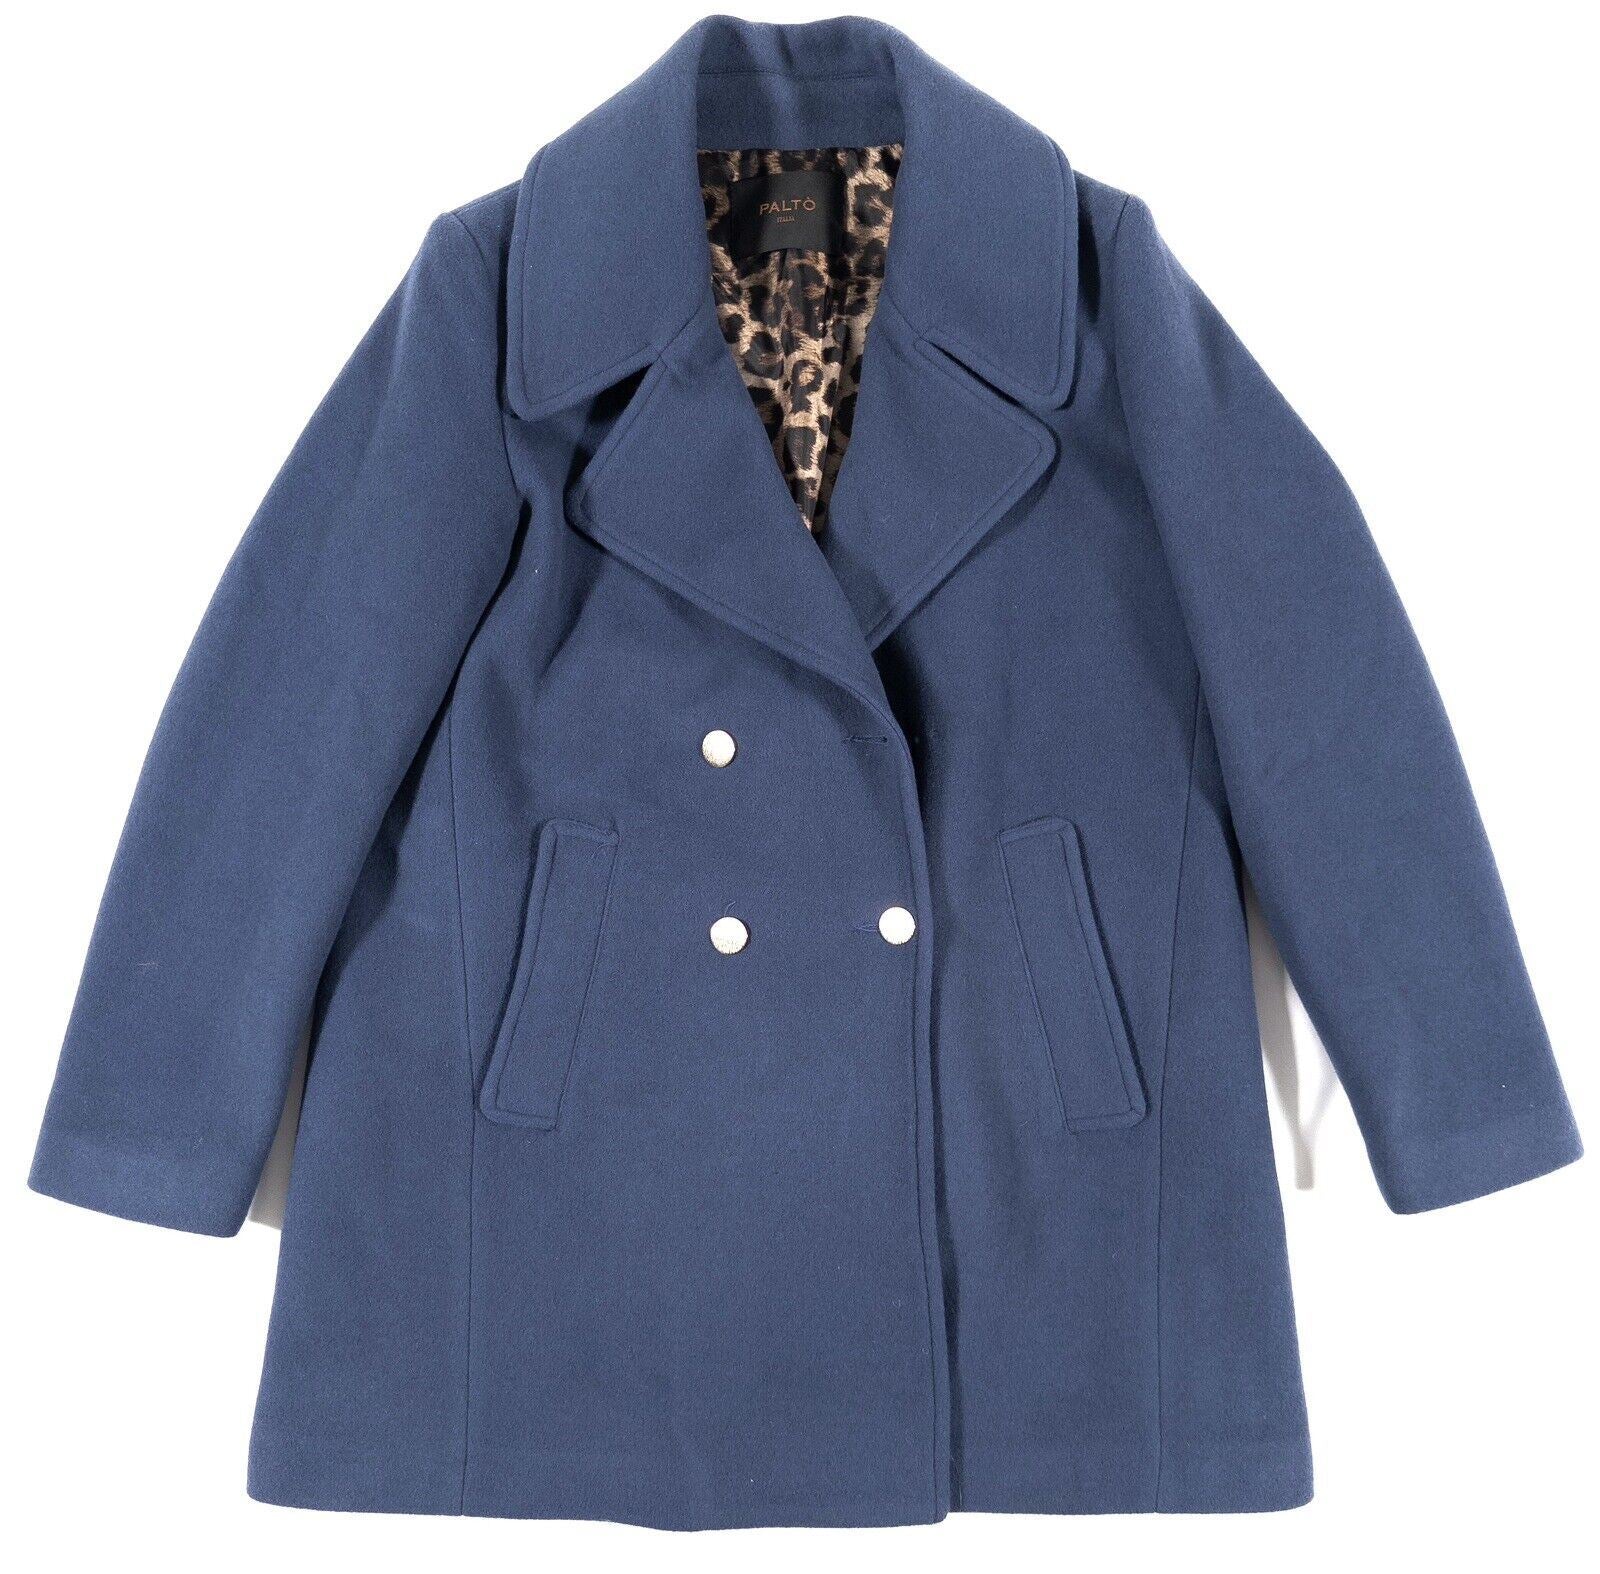 PALTO ITALIA Women's Blue Wool Coat Jacket Size UK 10